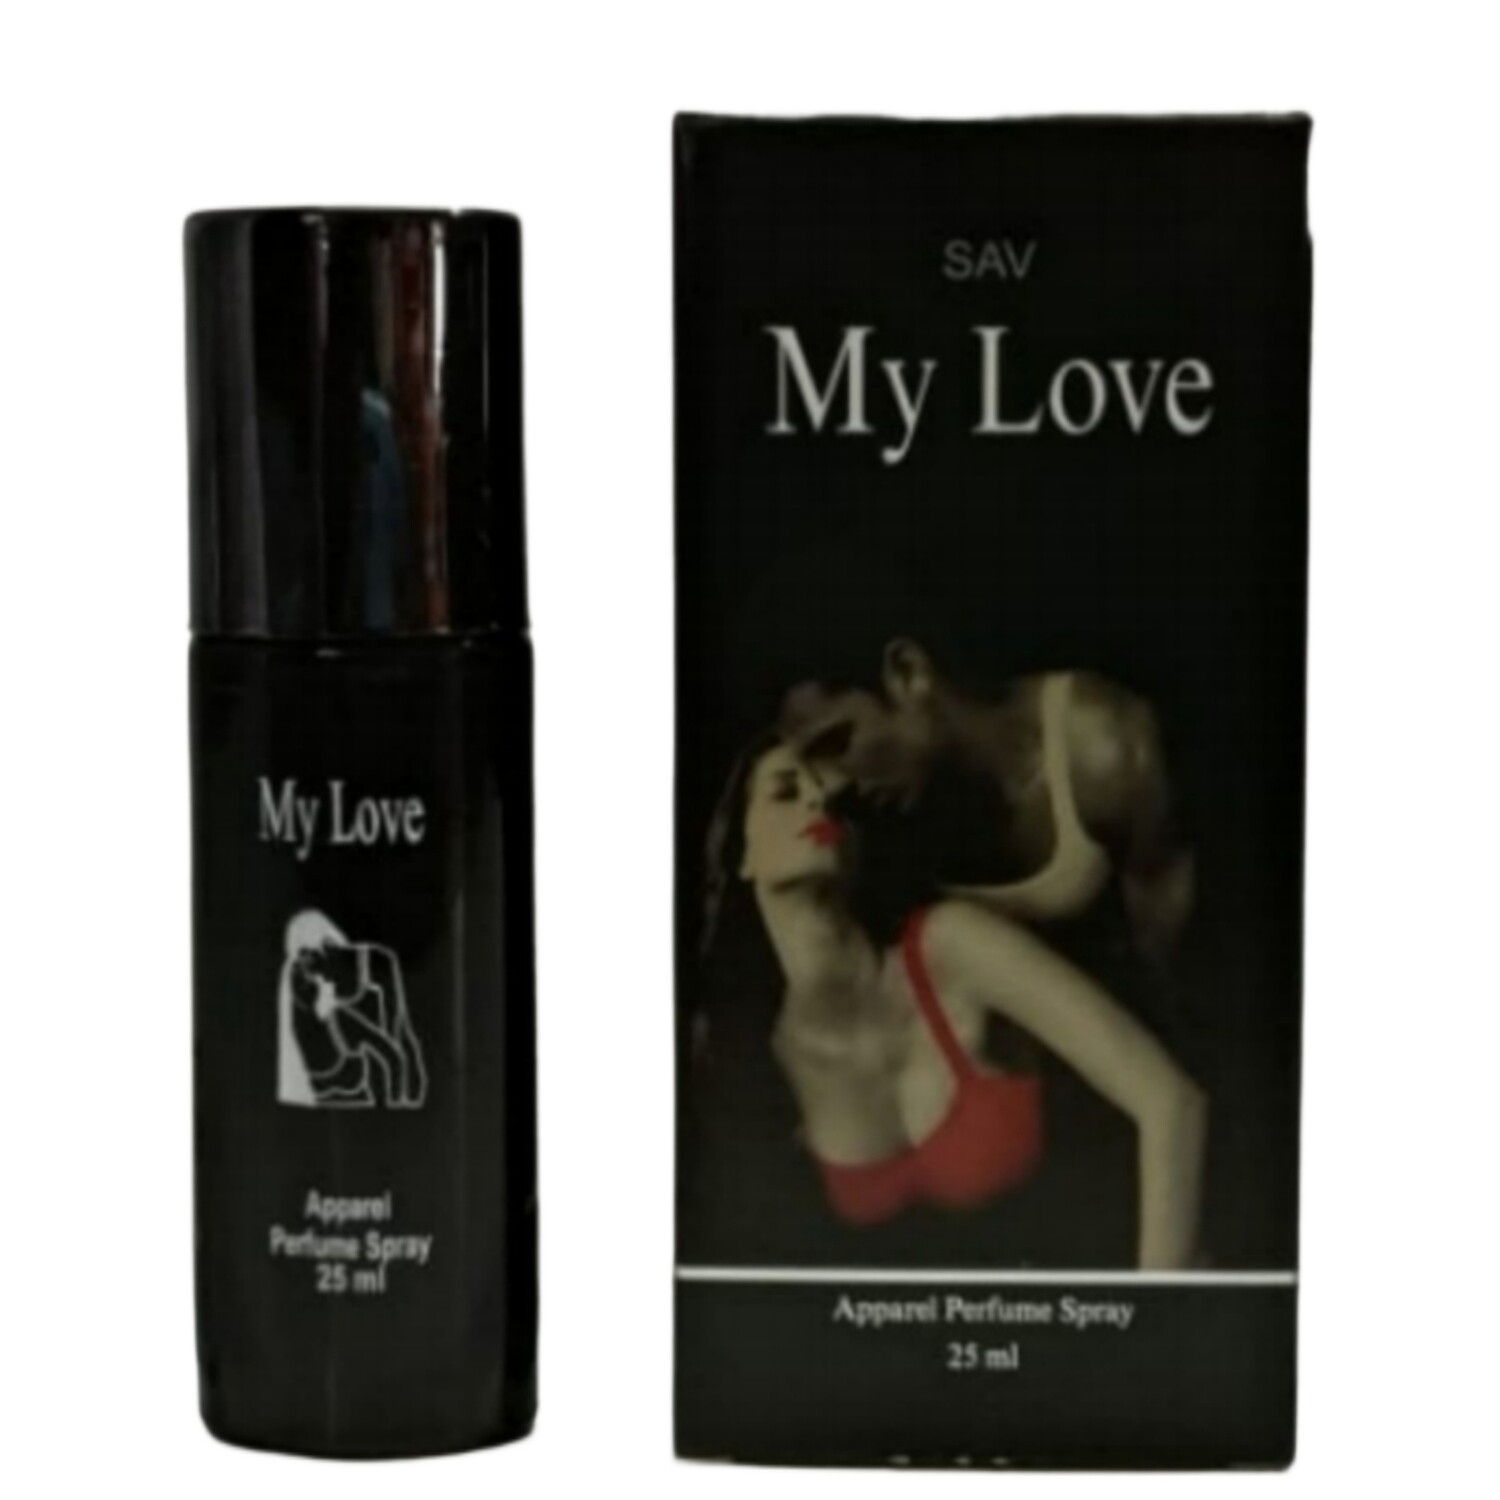 SAV My Love Apparel Perfume Spray 25 ml